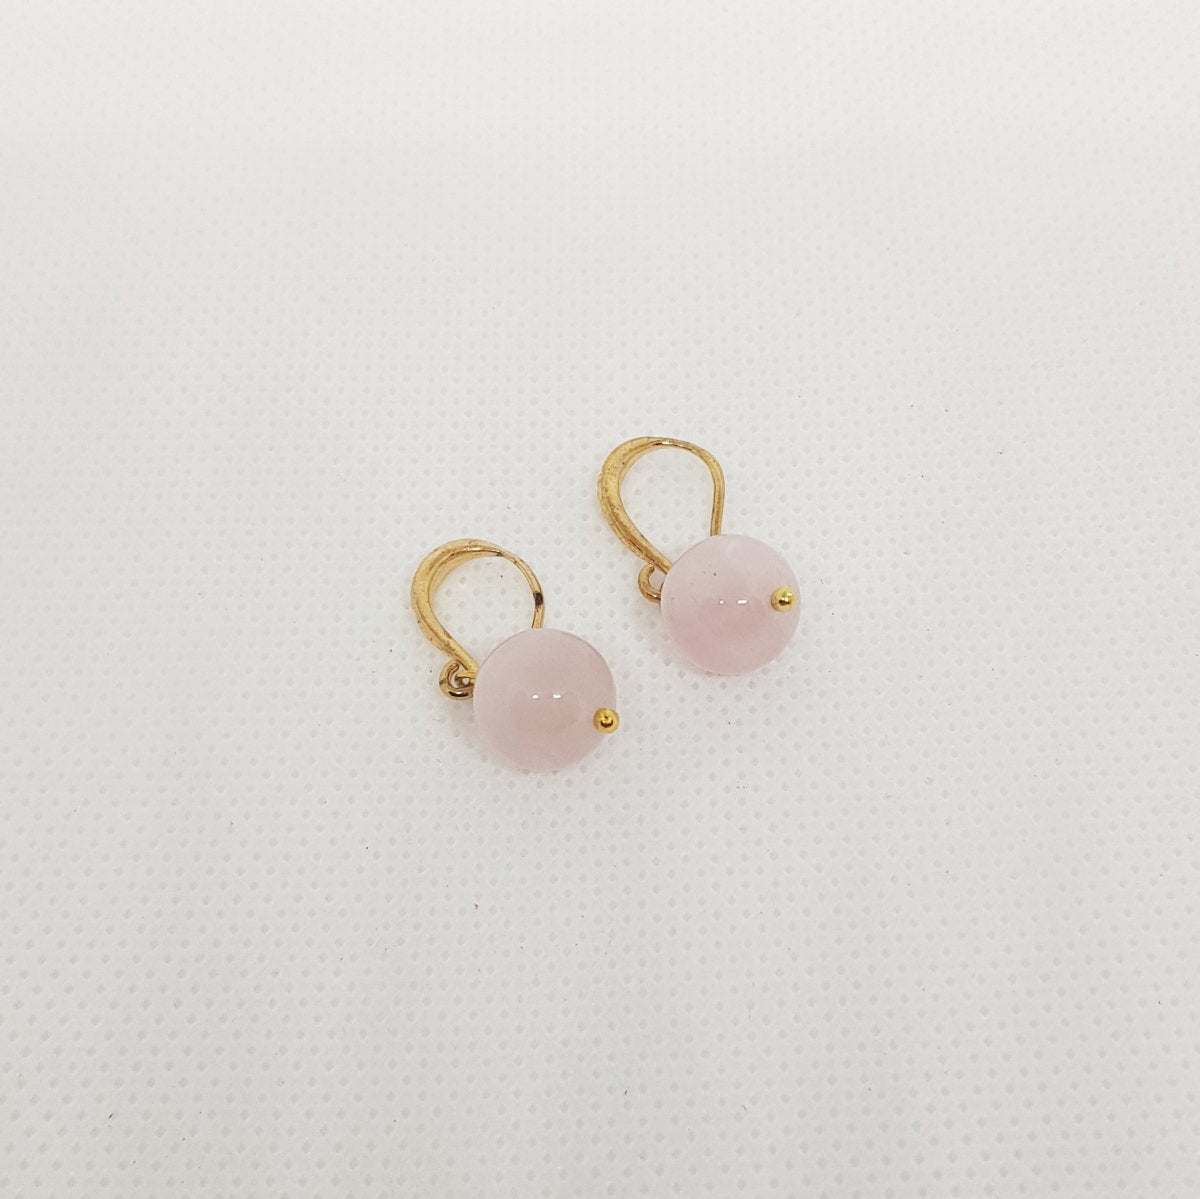 Rose Quartz Drop Earrings (Gold-Plated)